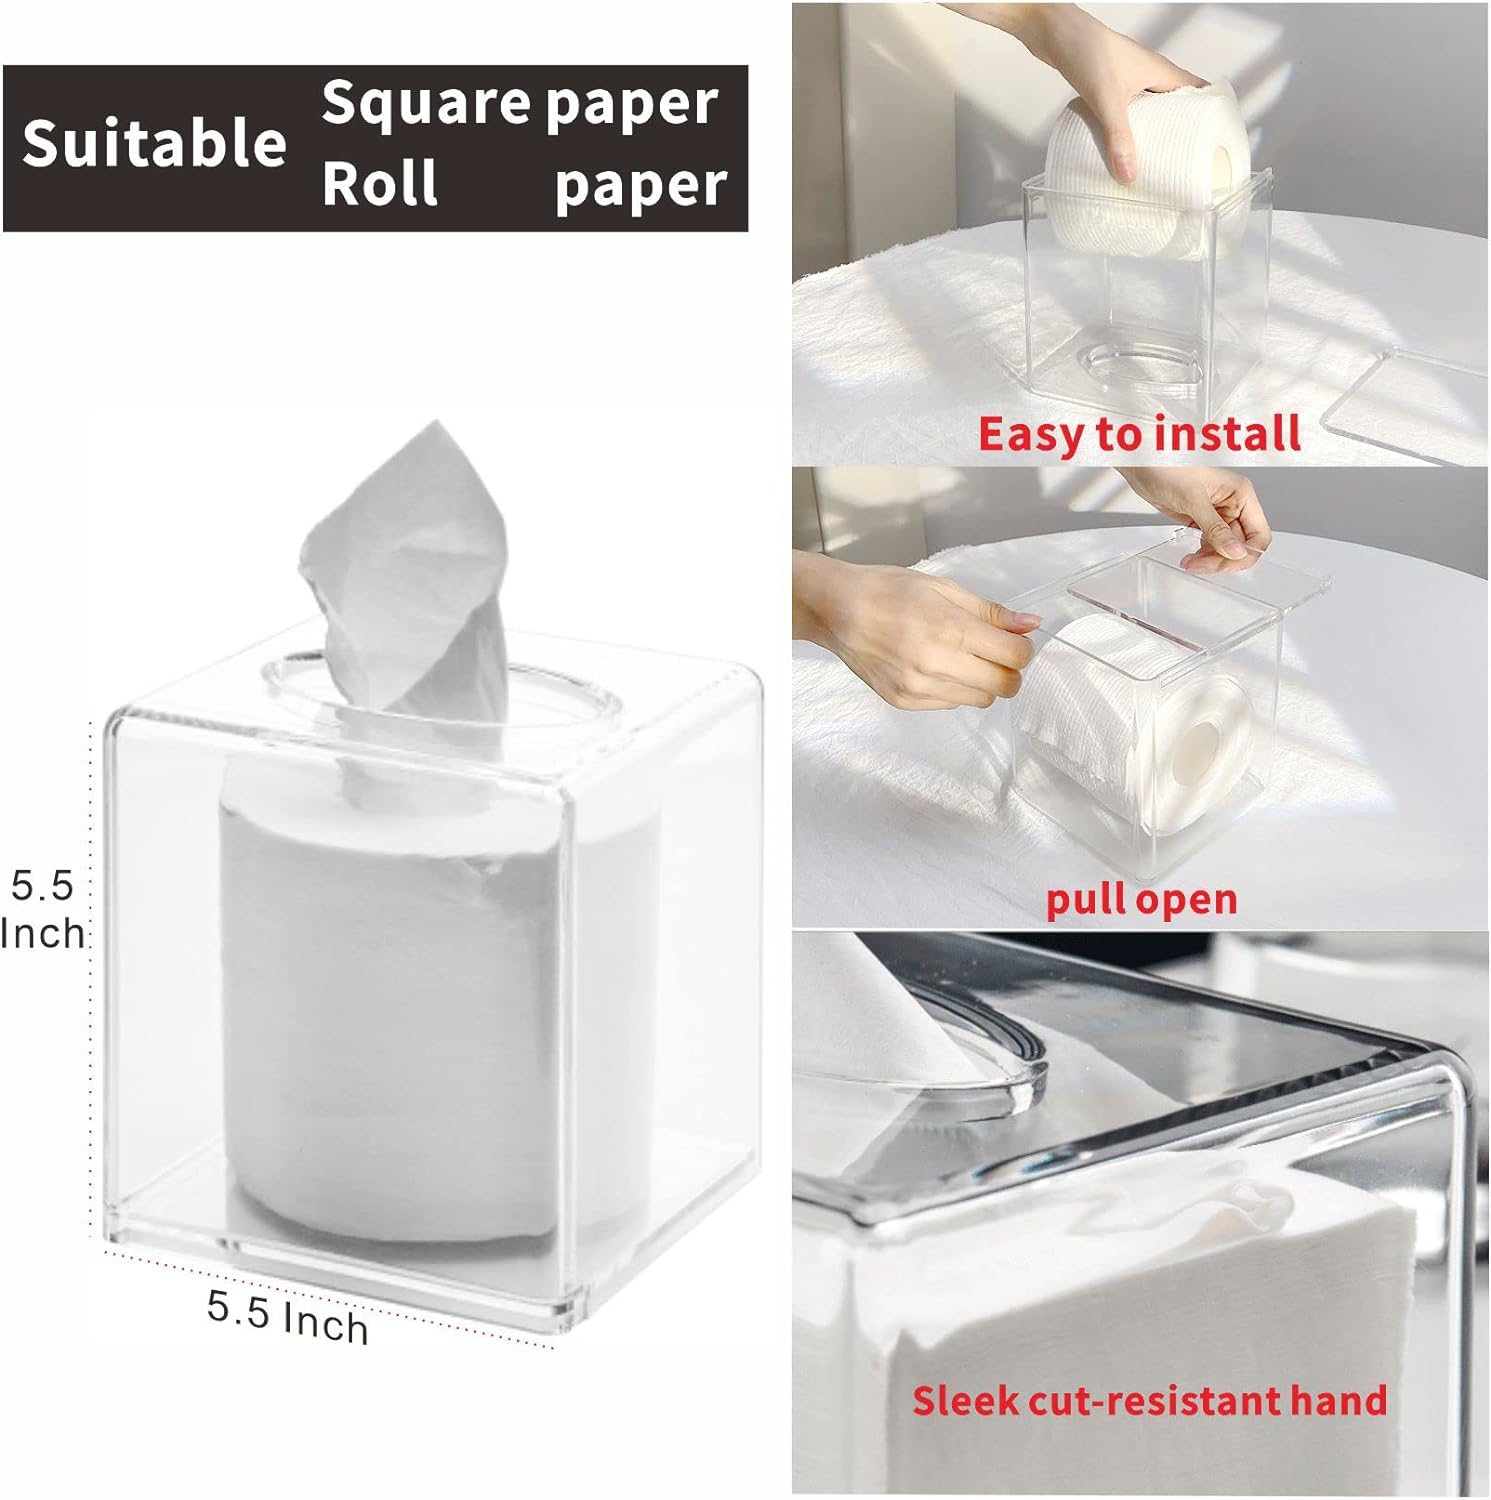 Countertop Facial Tissue Dispenser Box, Clear Plastic Tissue Organizer Container